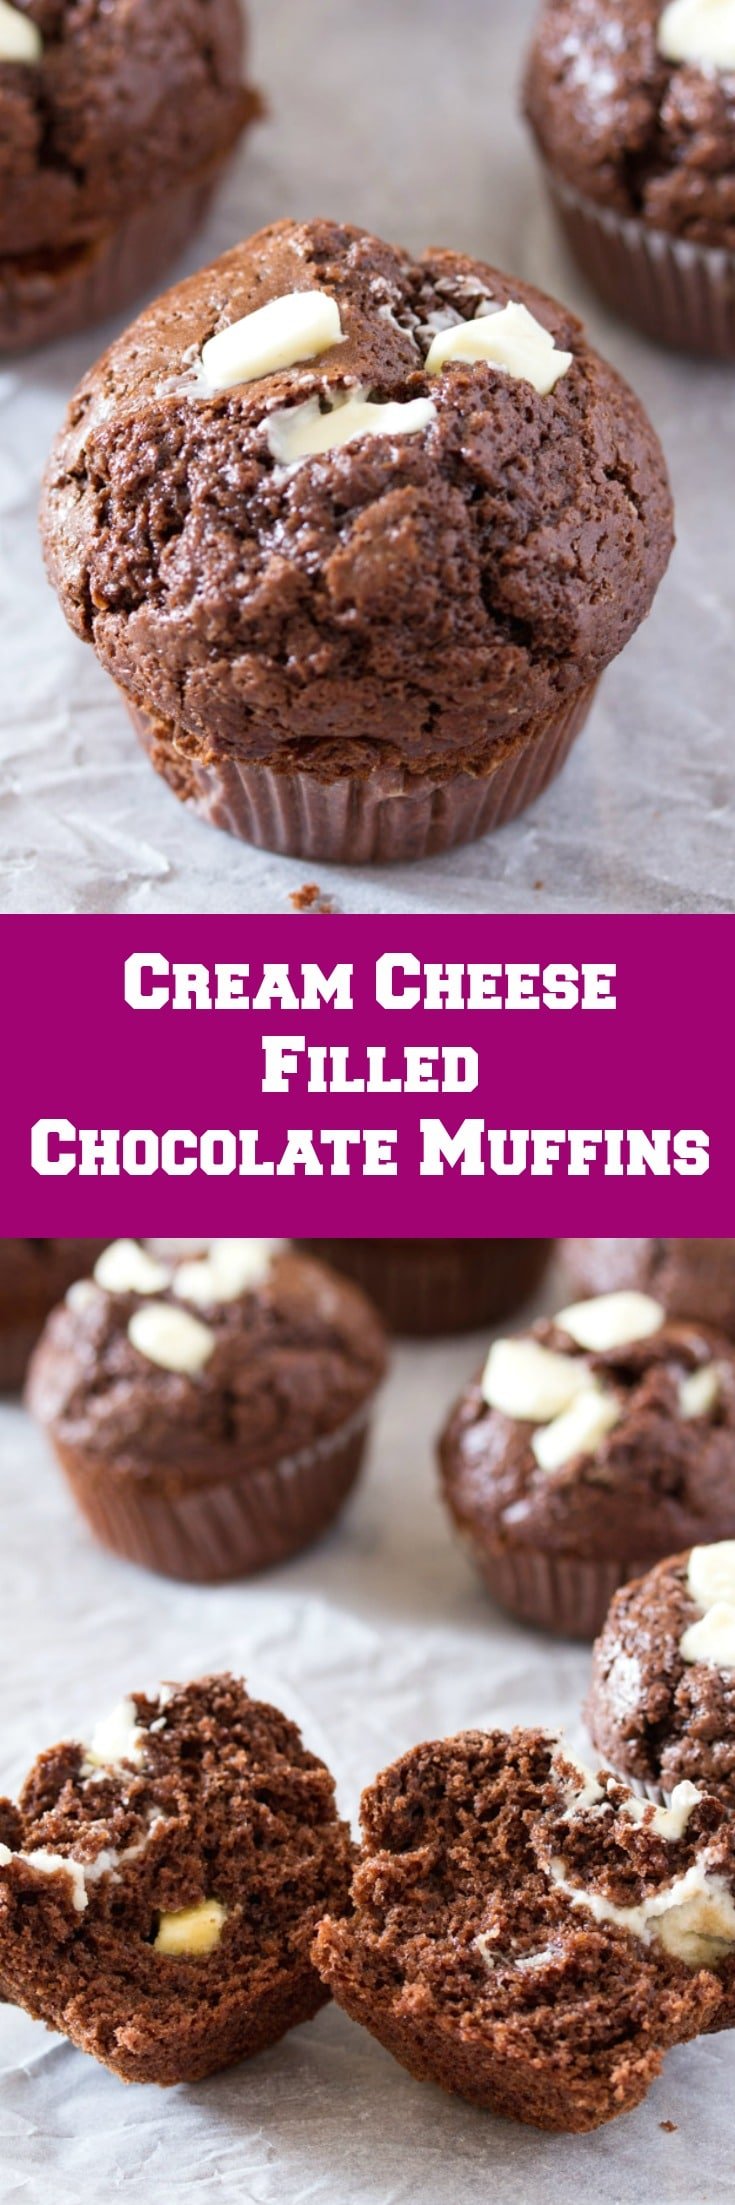 Cream Cheese Filled Chocolate Muffins